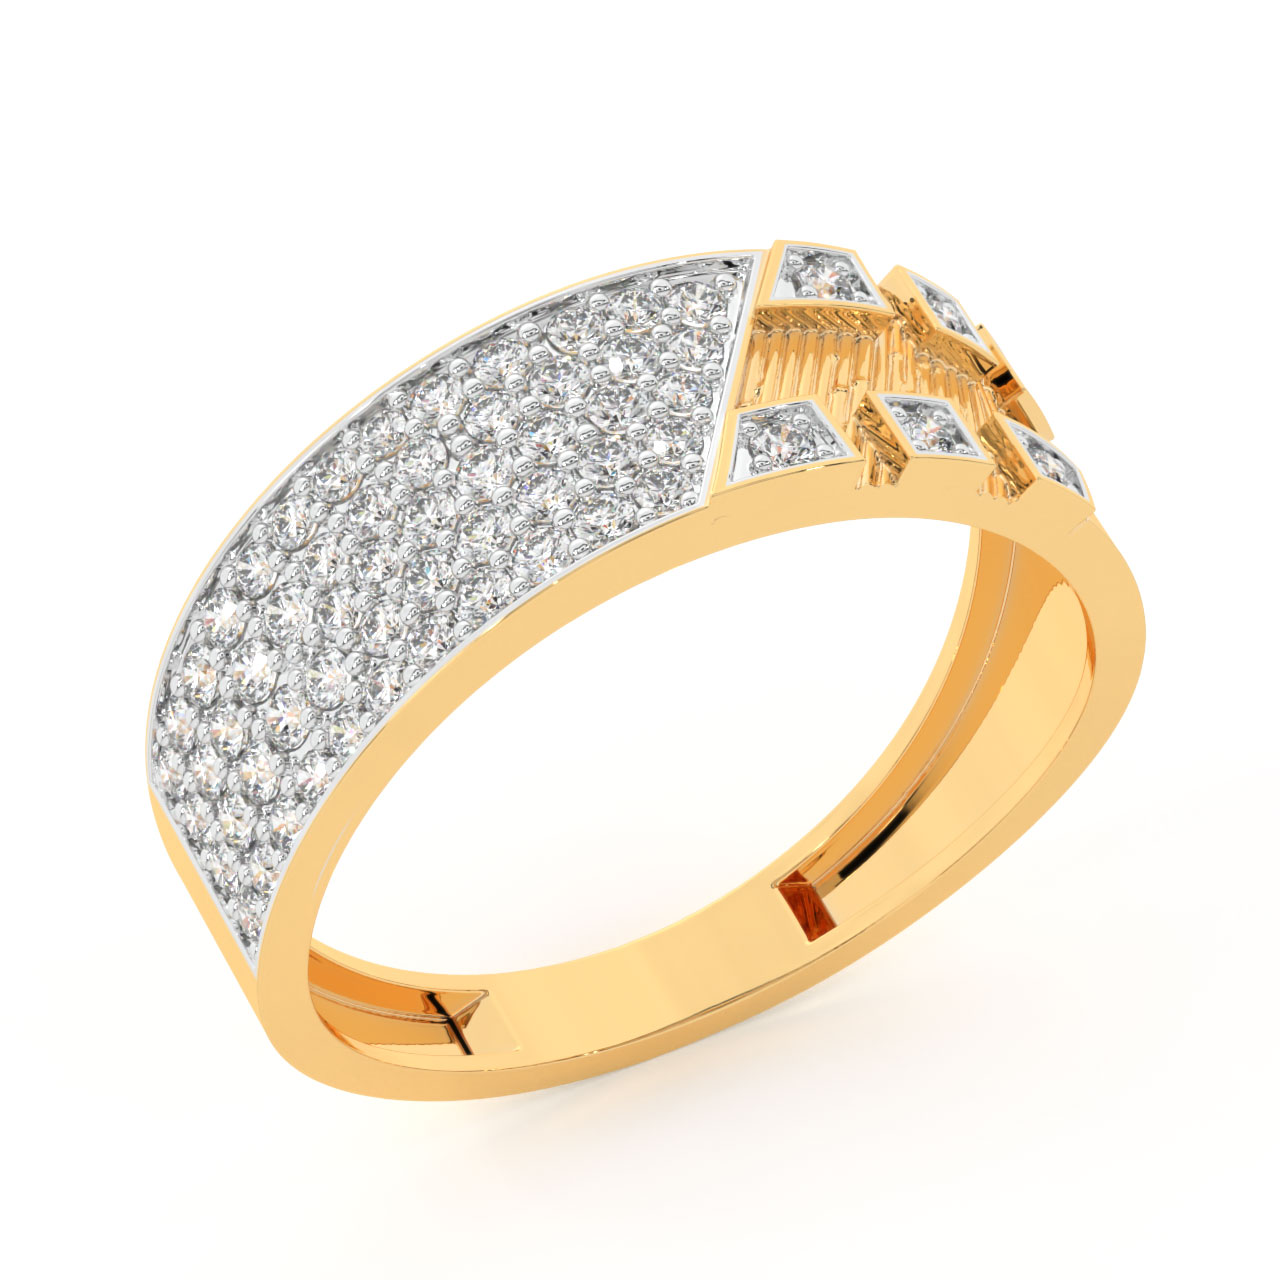 Special Men's Diamond Engagement Ring In 14 K White Gold